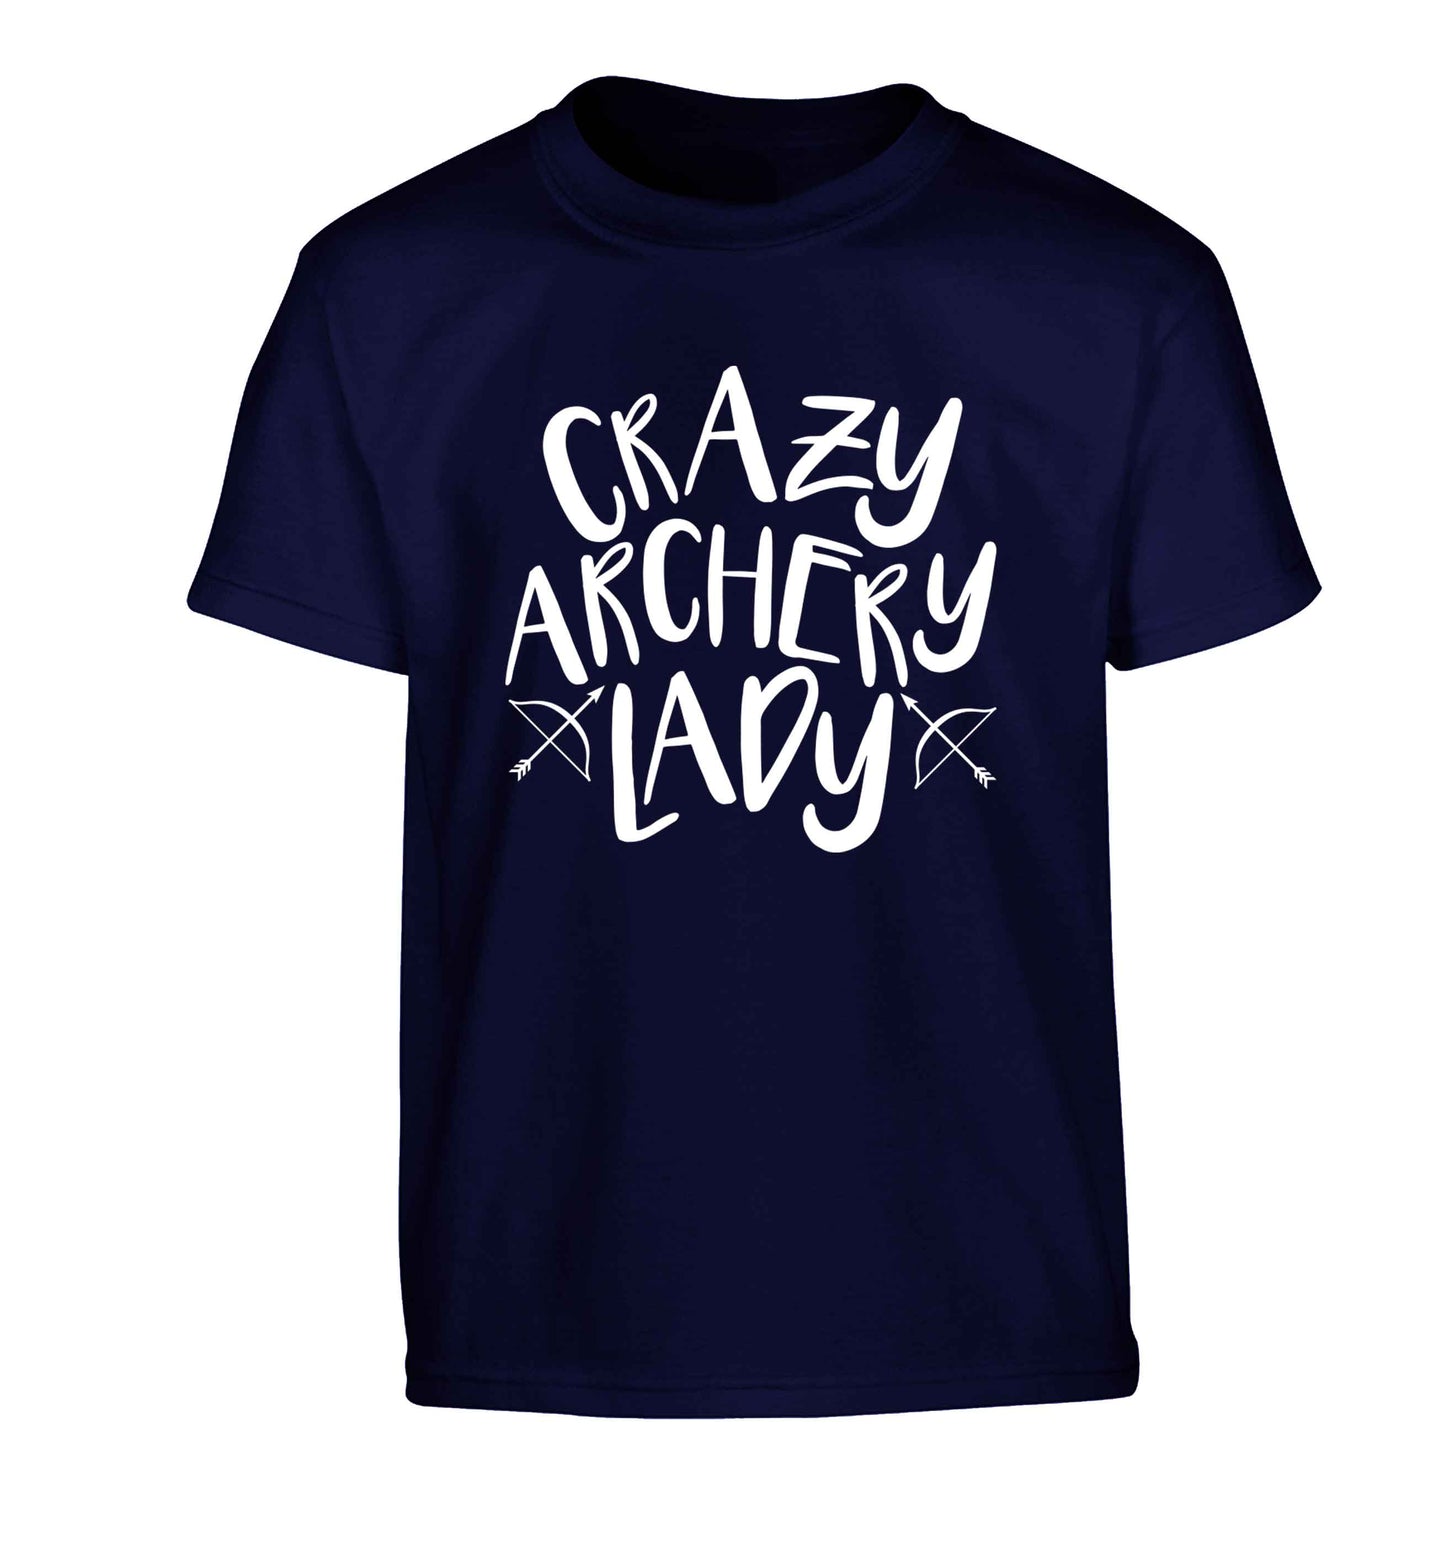 Crazy archery lady Children's navy Tshirt 12-13 Years